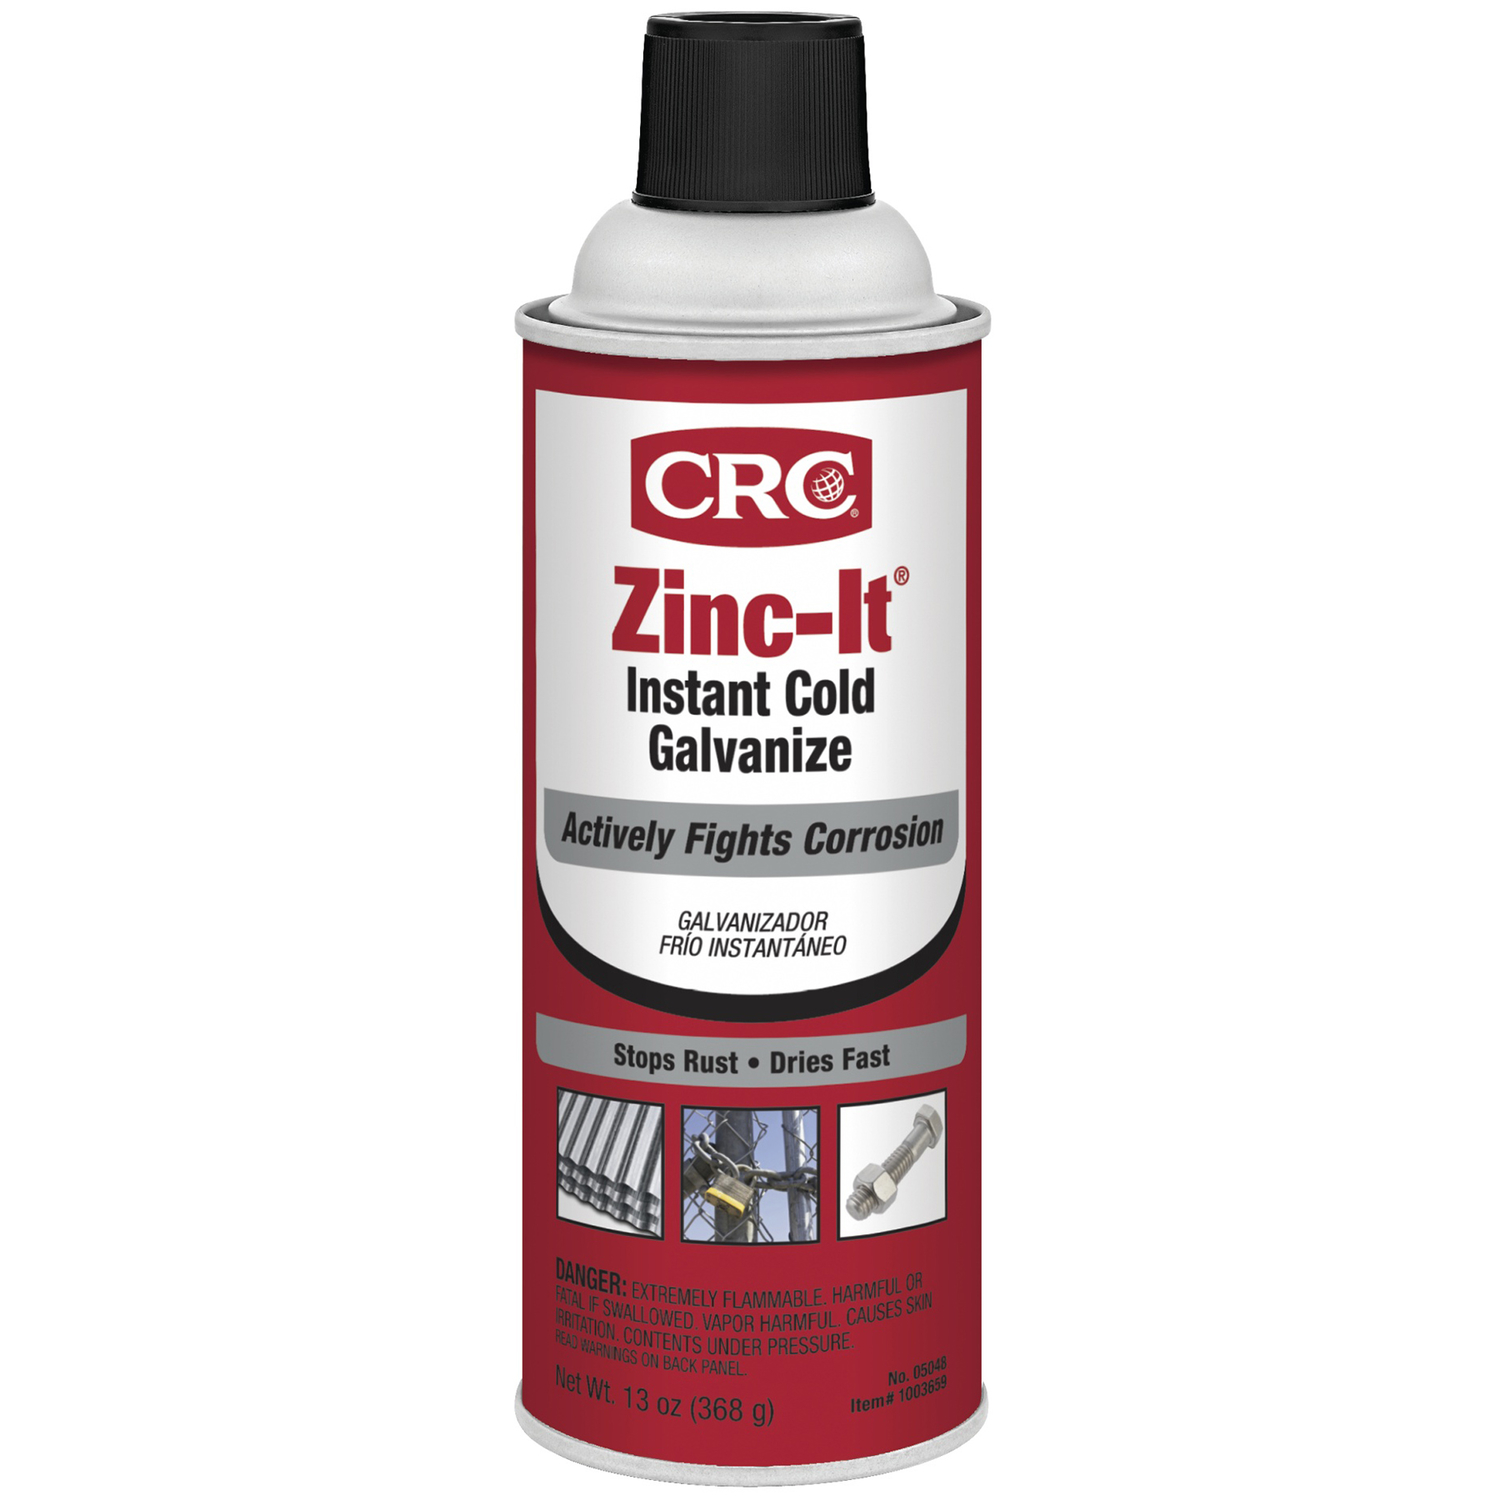 CRC Food Grade Liquid Silicone Spray - TCW Equipment